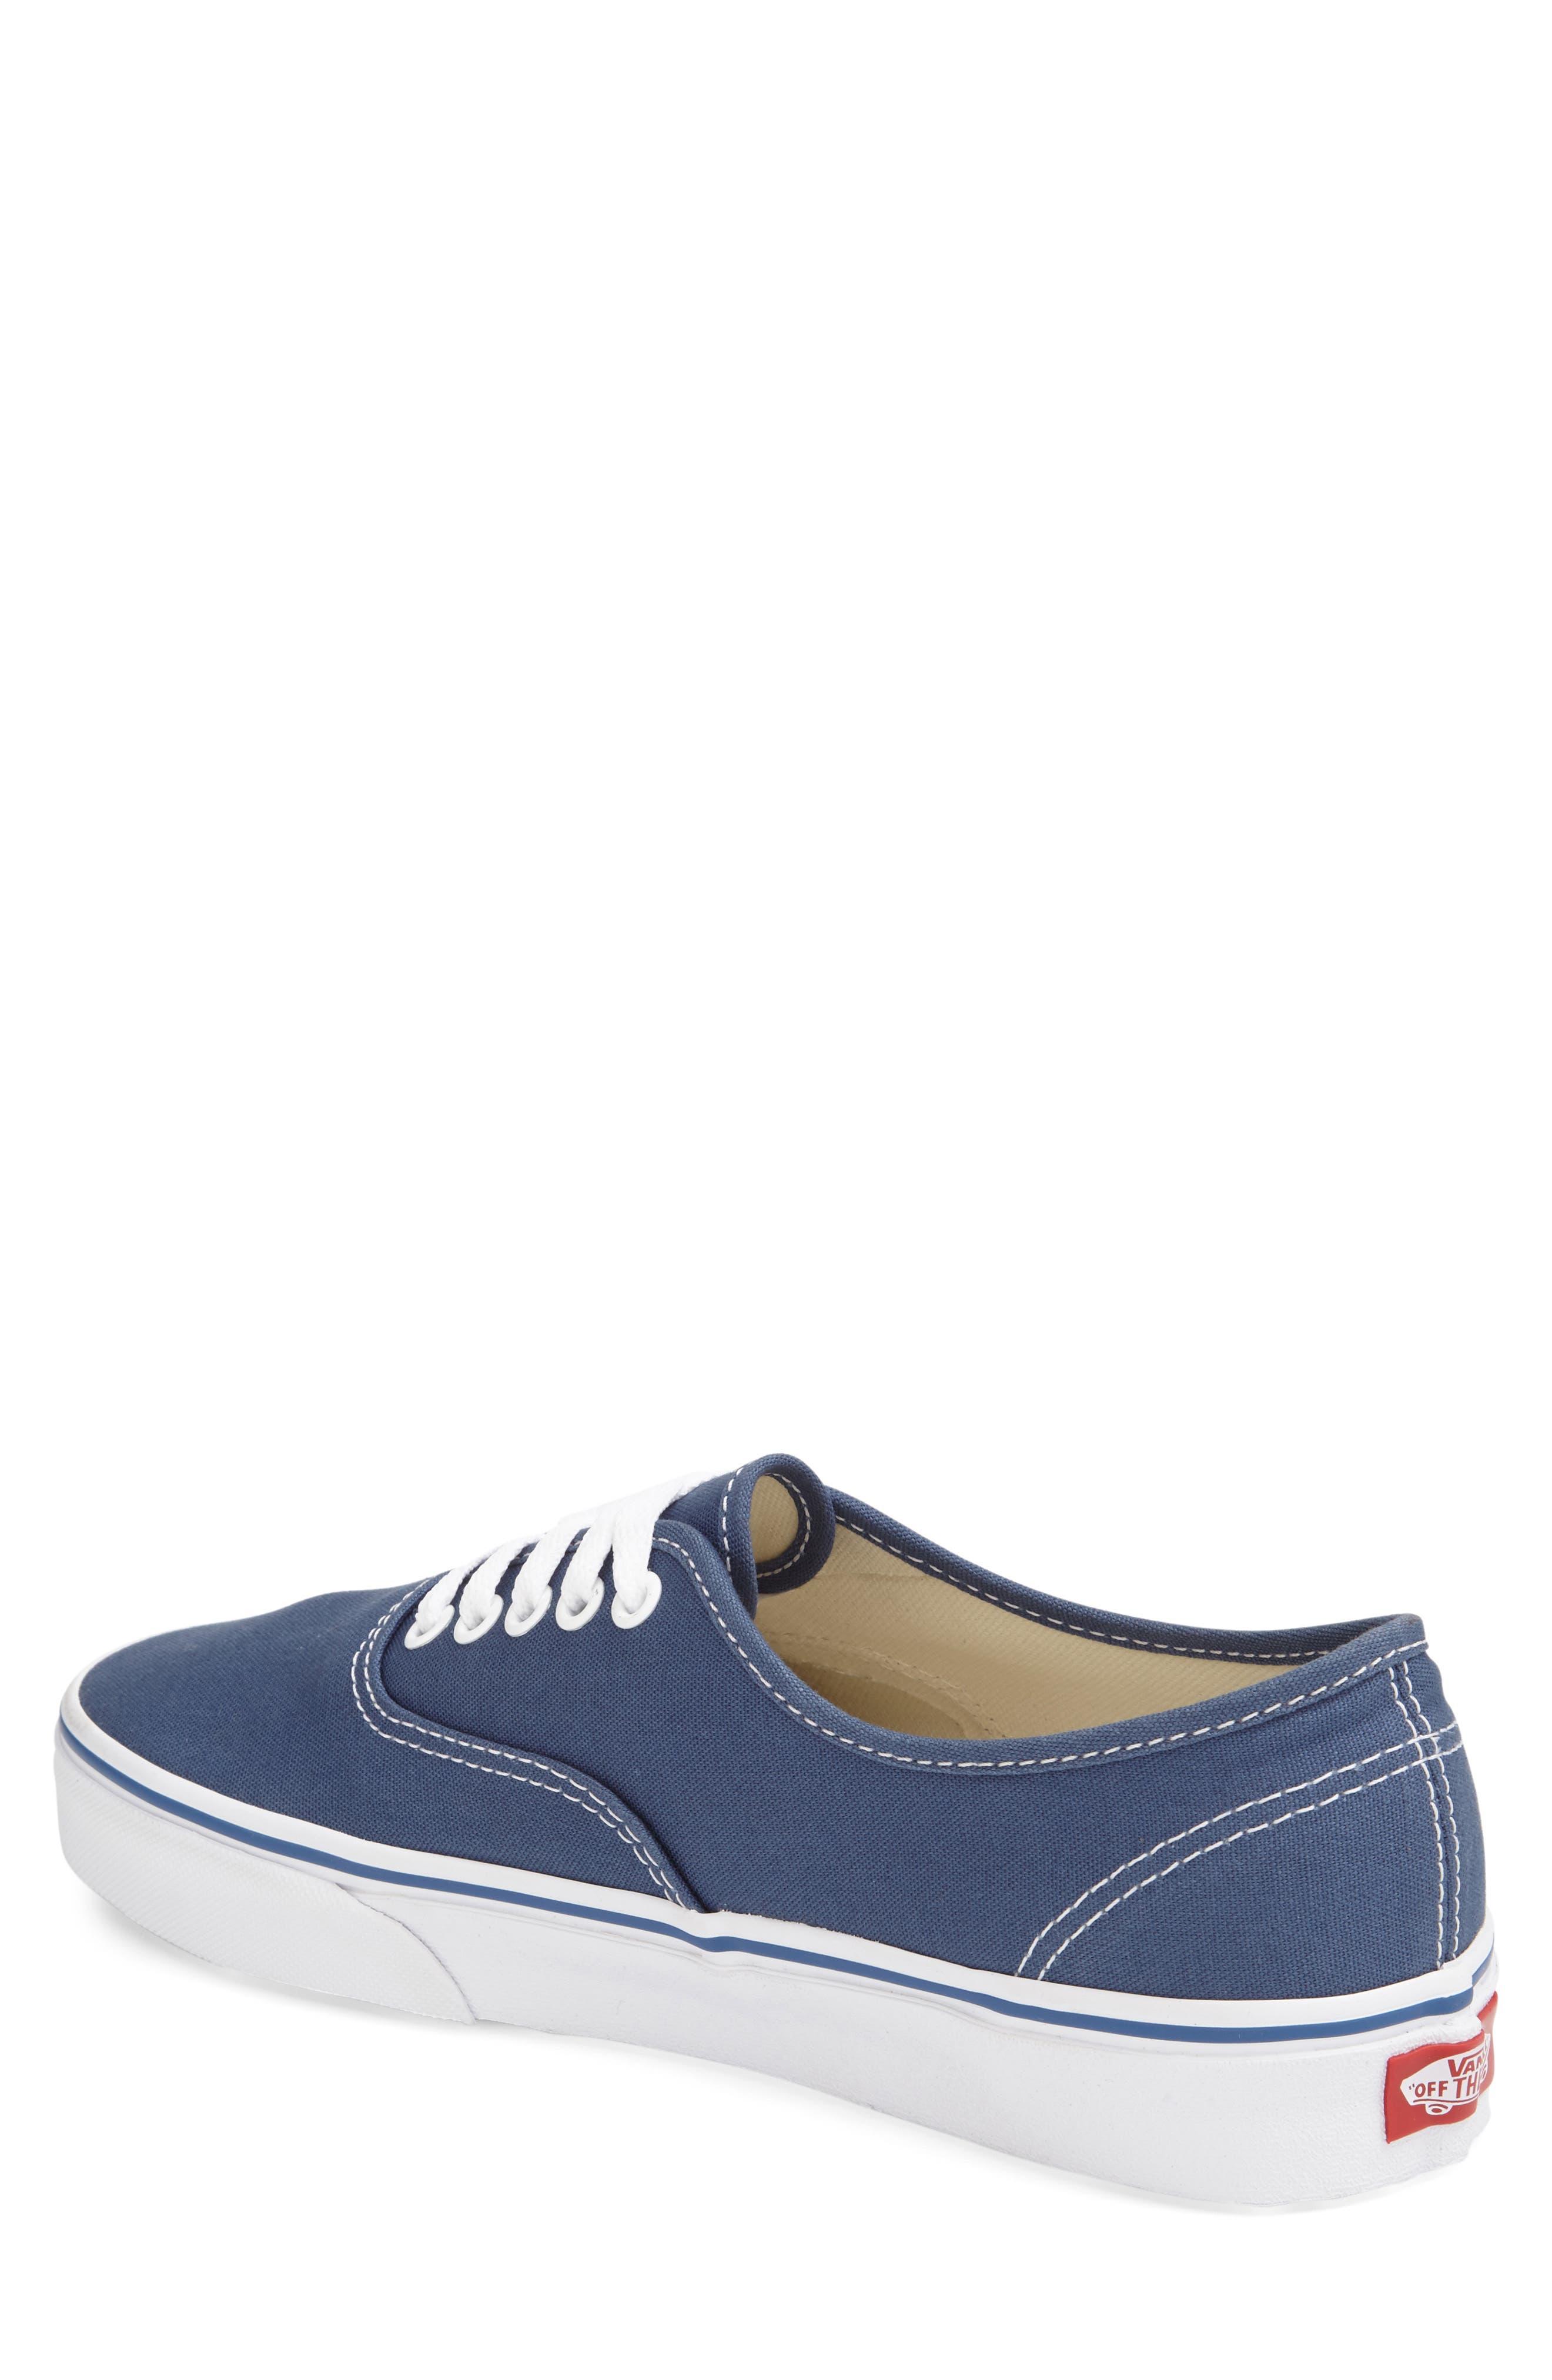 Vans Authentic Sneaker in Blue | Lyst